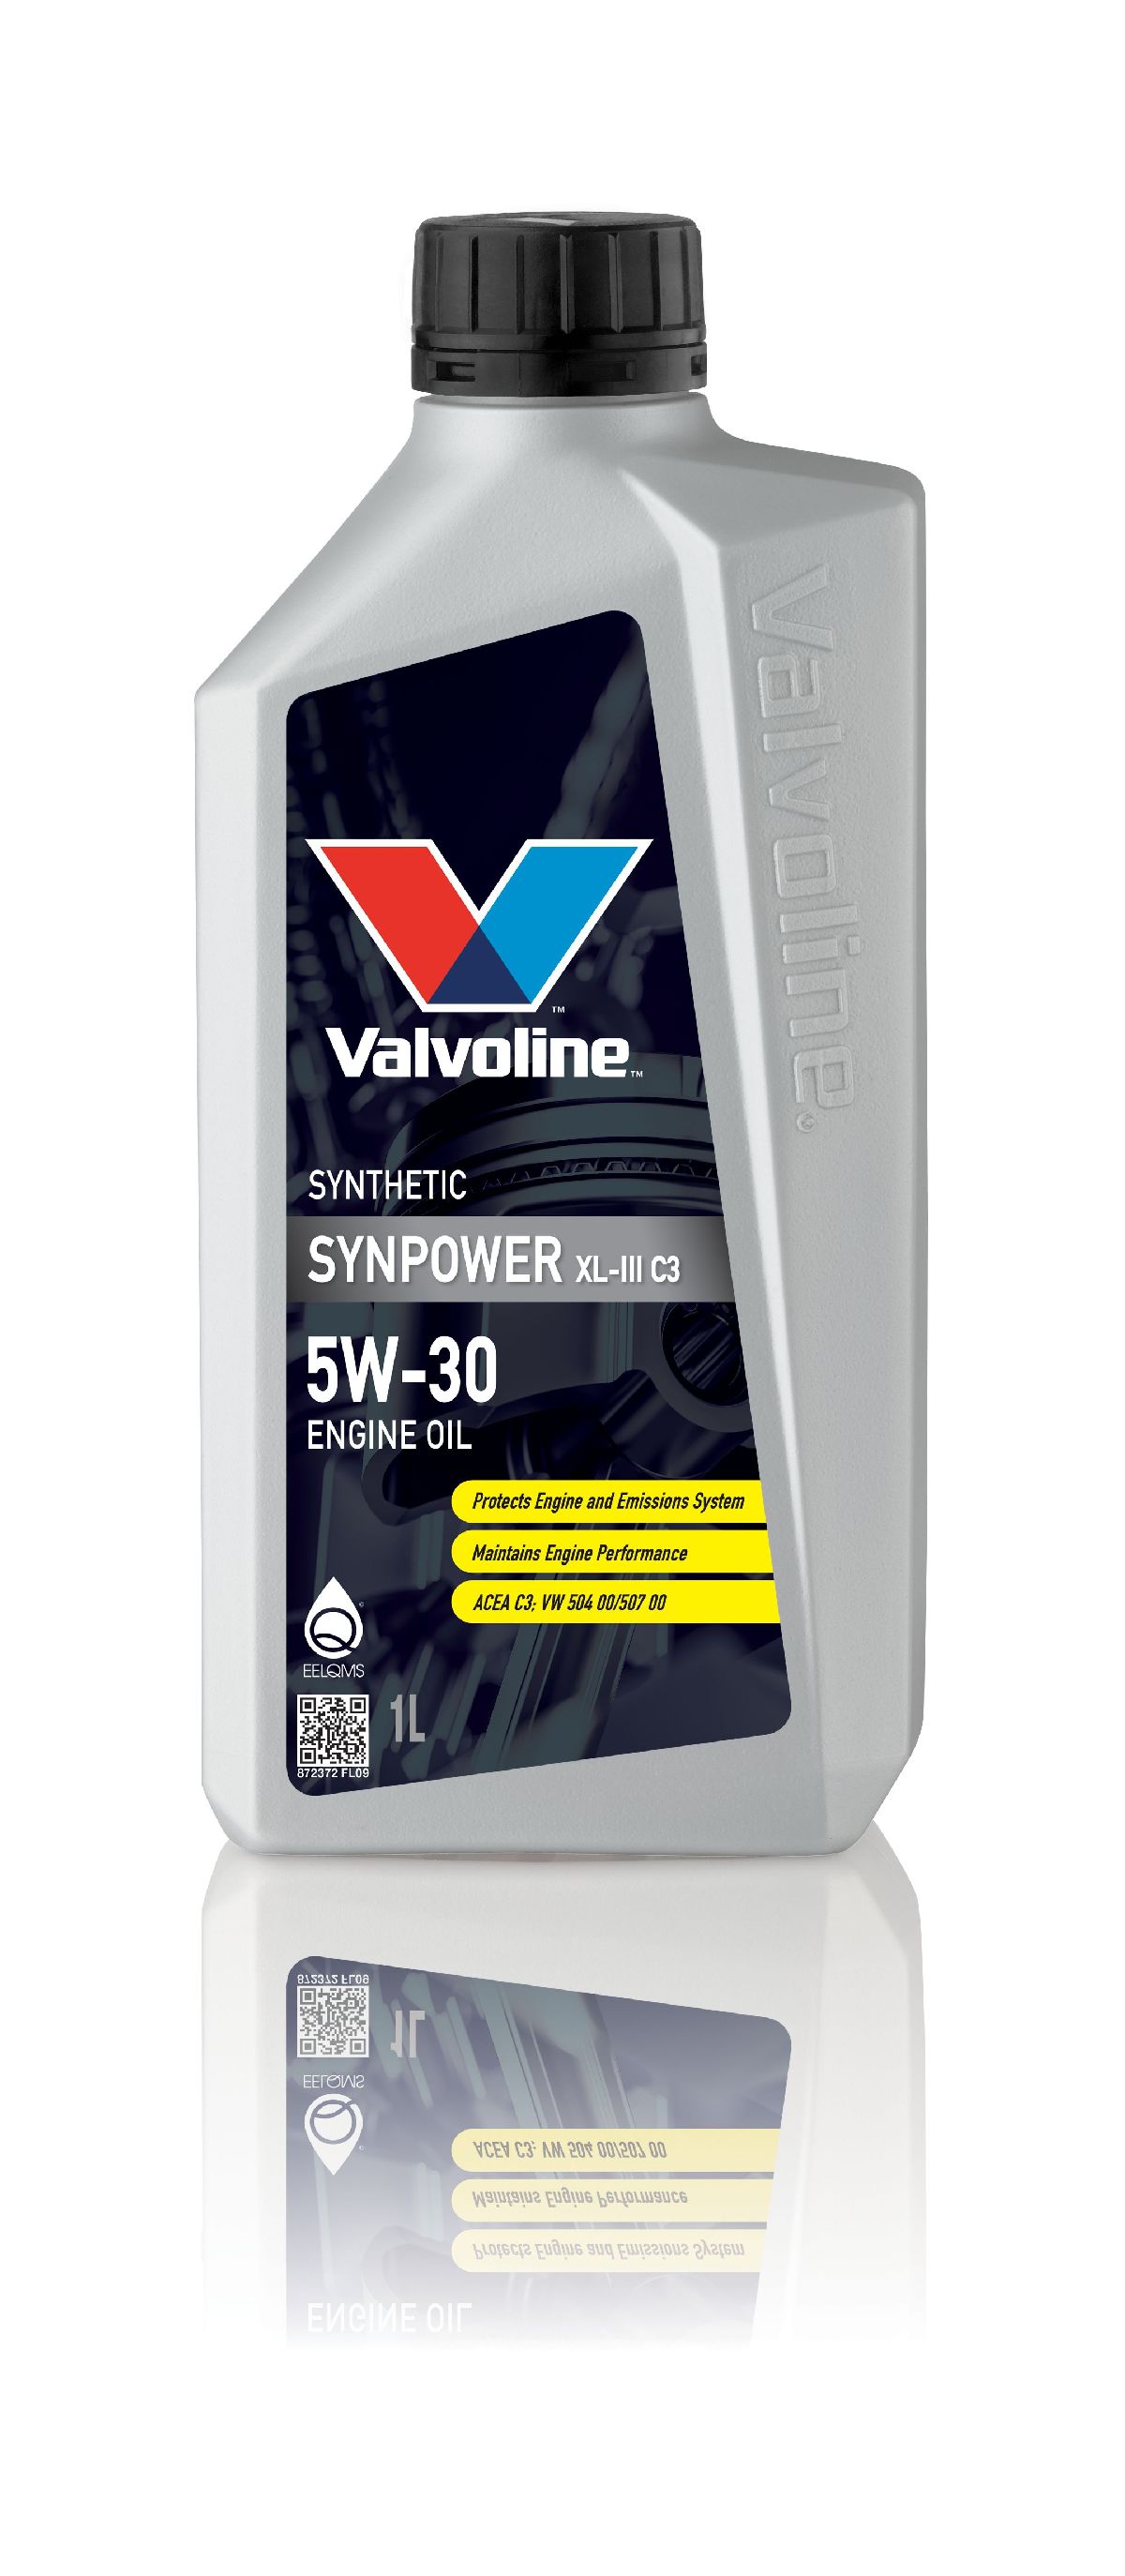 Valvoline Synpower XL-III C3 5W-30